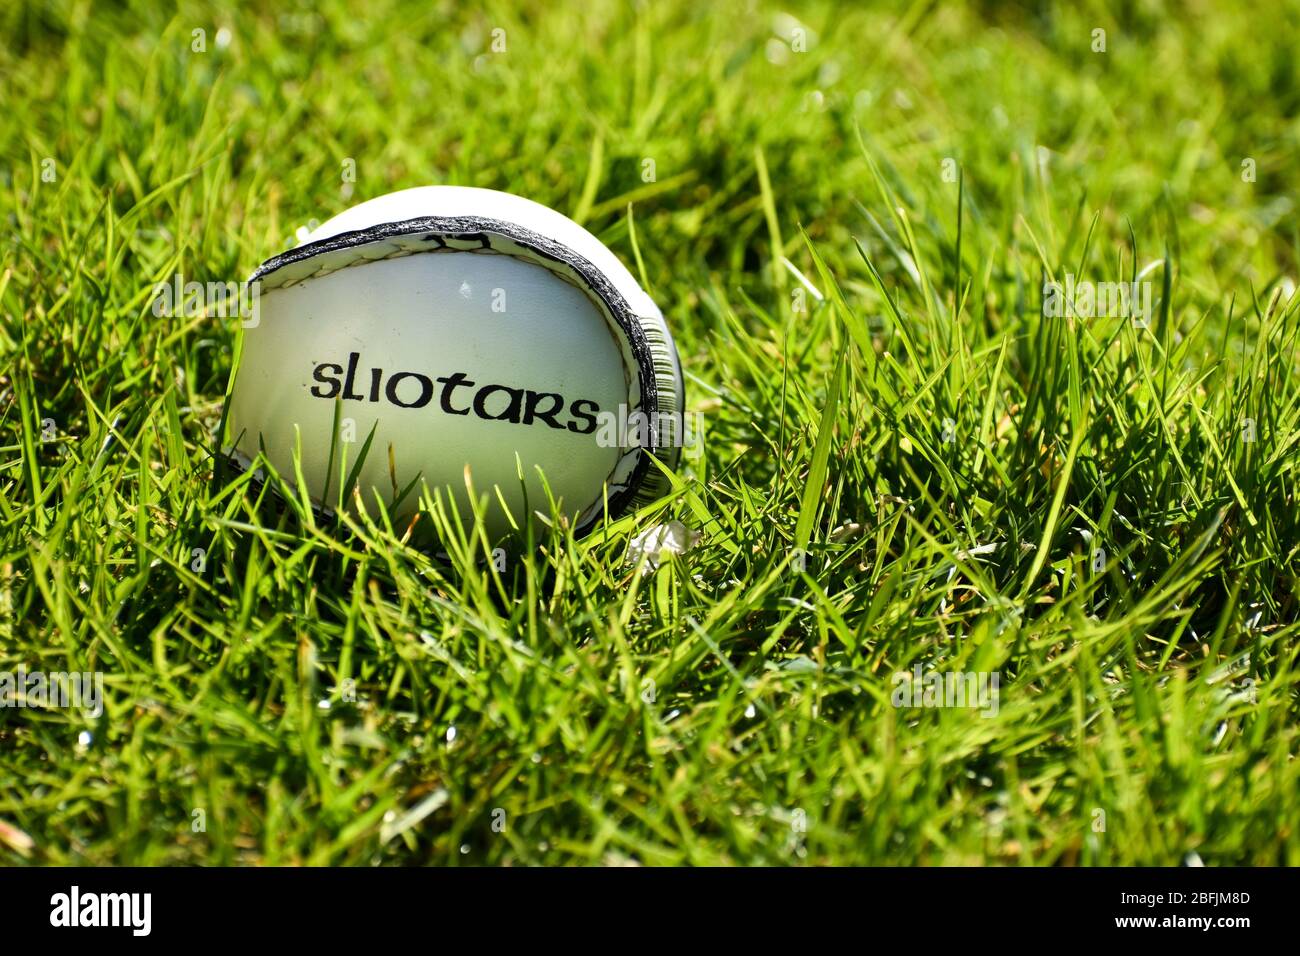 Irish Hurling or Camogie sliotar ball on a grass playing field Stock Photo